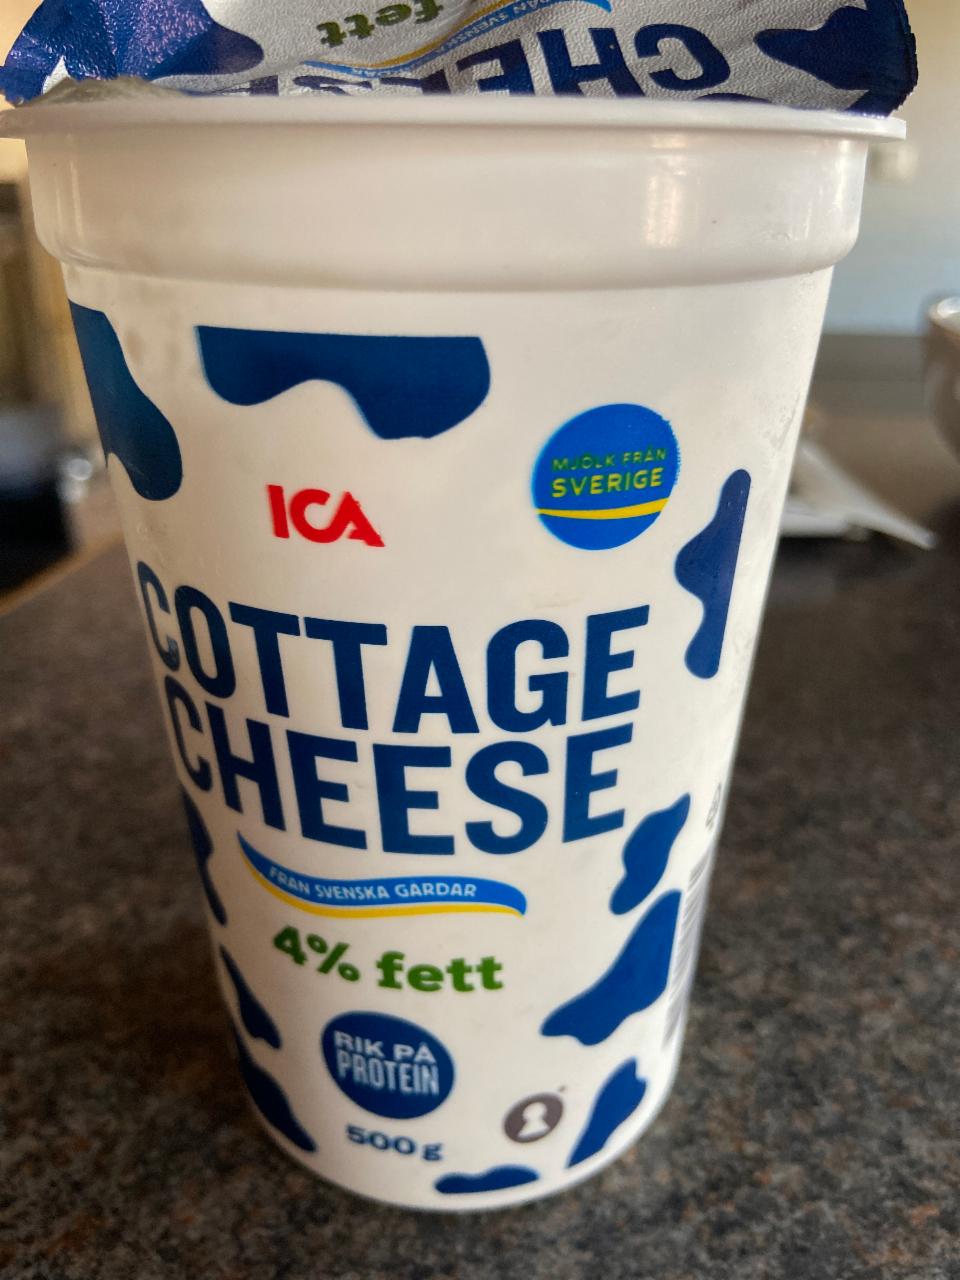 Fotografie - Cottage Cheese 4% fett ICA